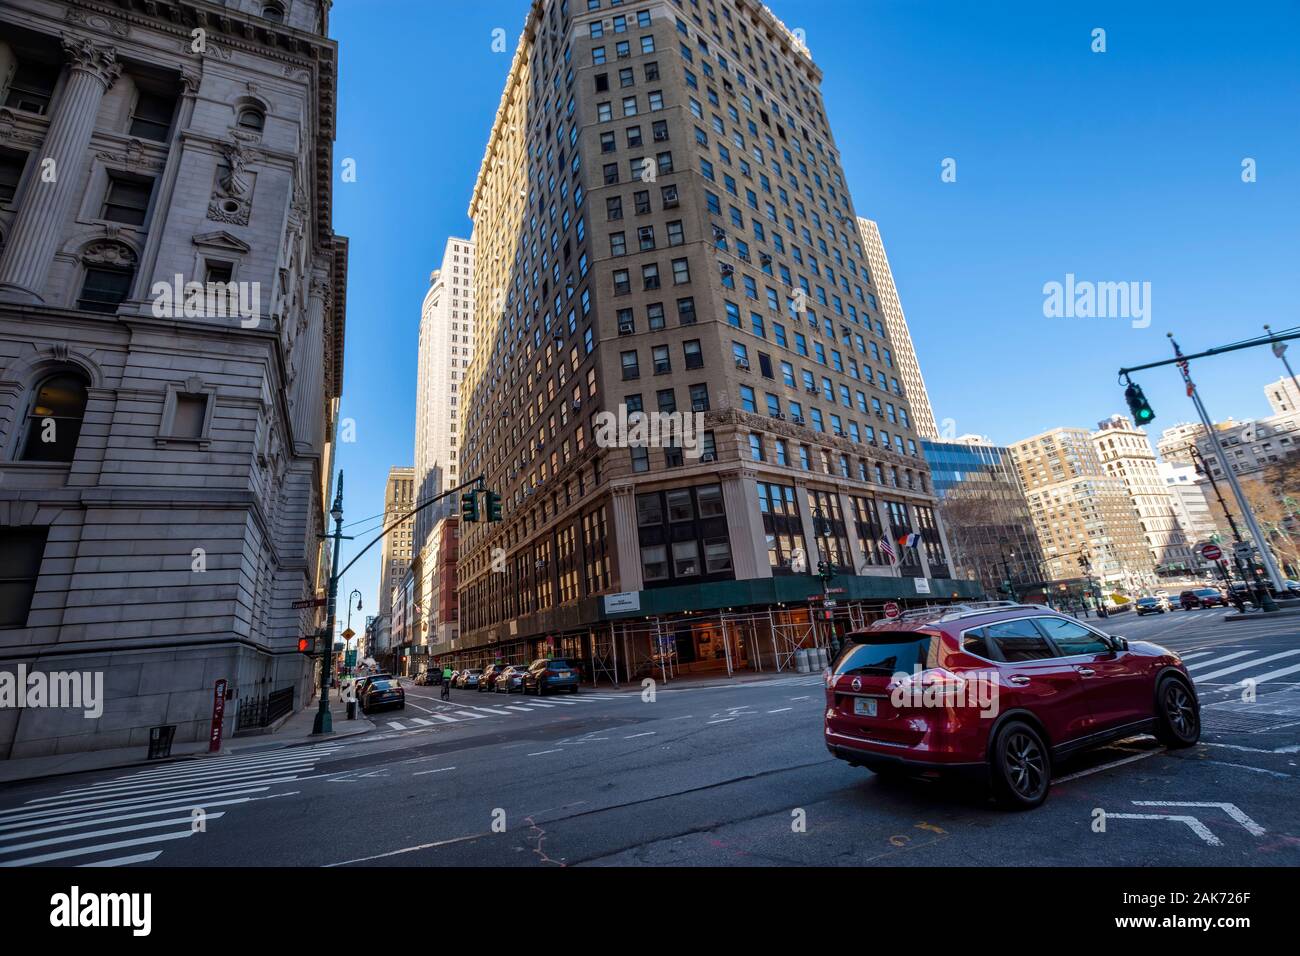 Manhattan, New York, NY, USA - November 30, 2019. Lafayette Street, major street in New York City's Lower Manhattan . Stock Photo